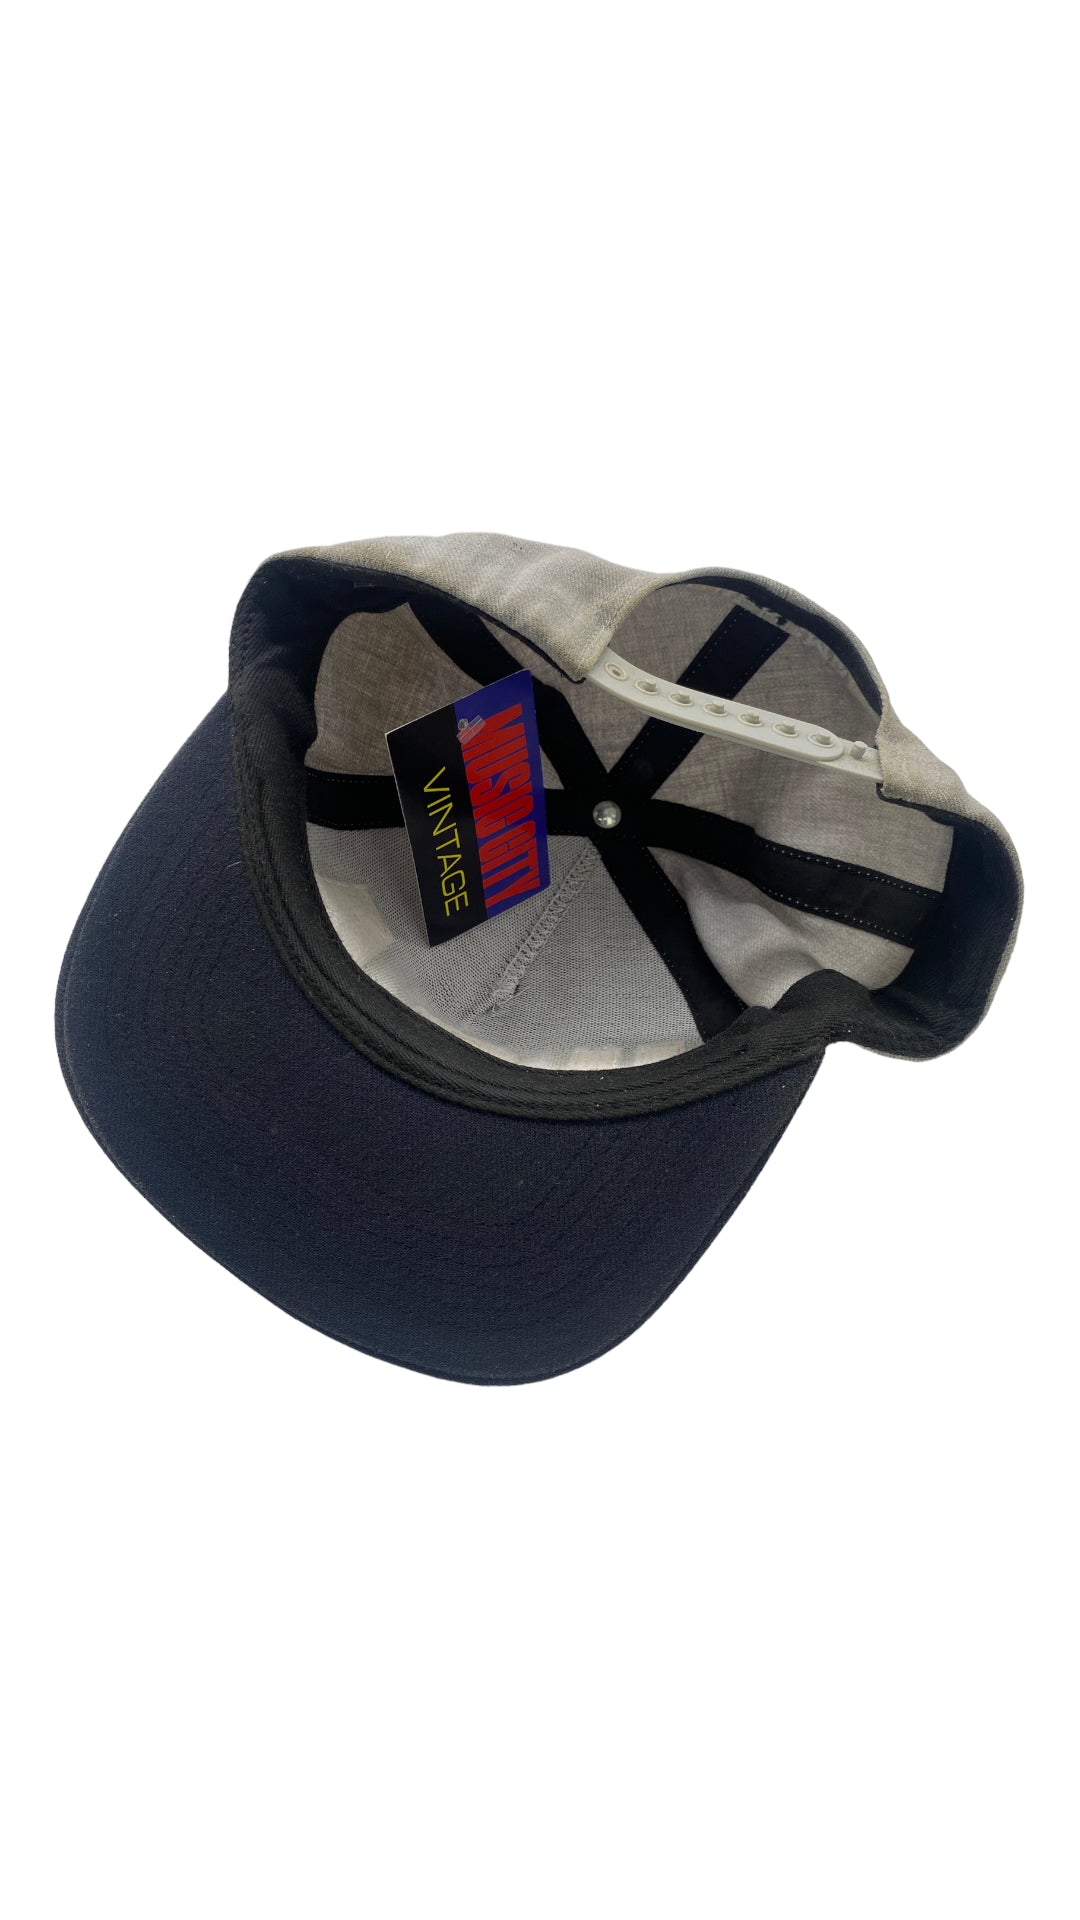 Preowned Supreme SS12 USA 5 Panel Snapback Hat